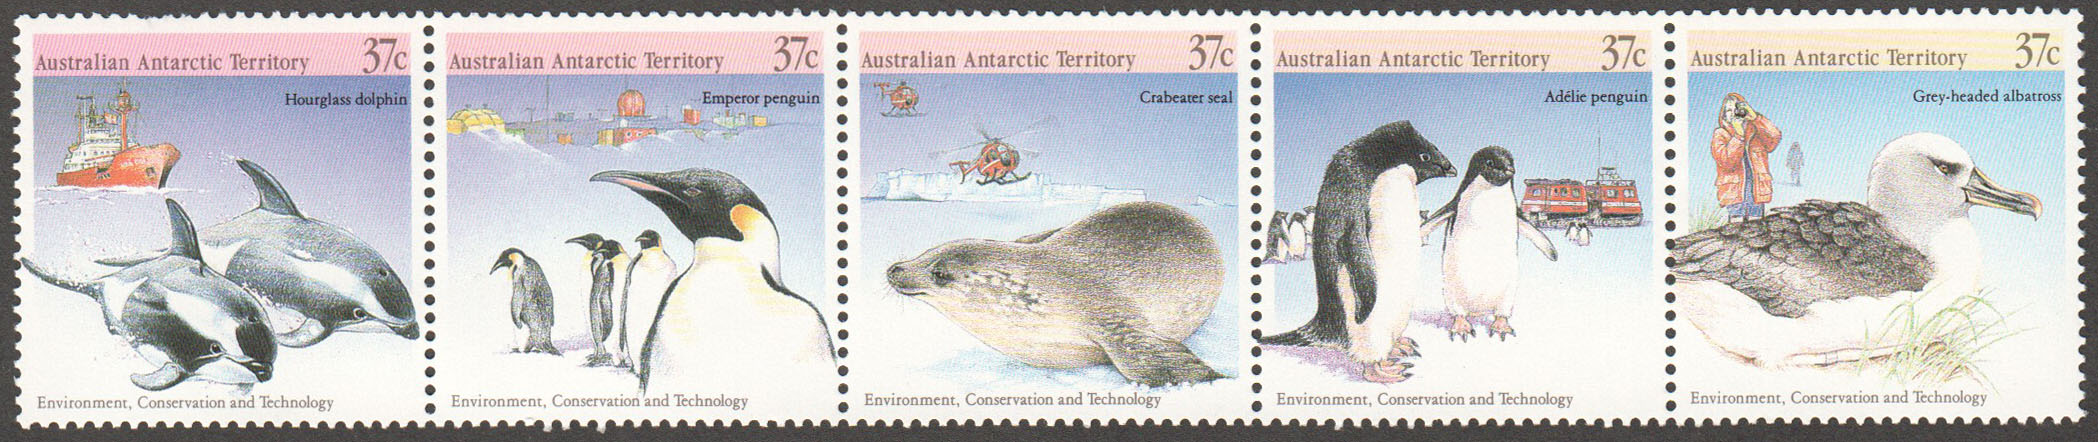 Australian Antarctic Territory Scott L76 MNH (A2-14)